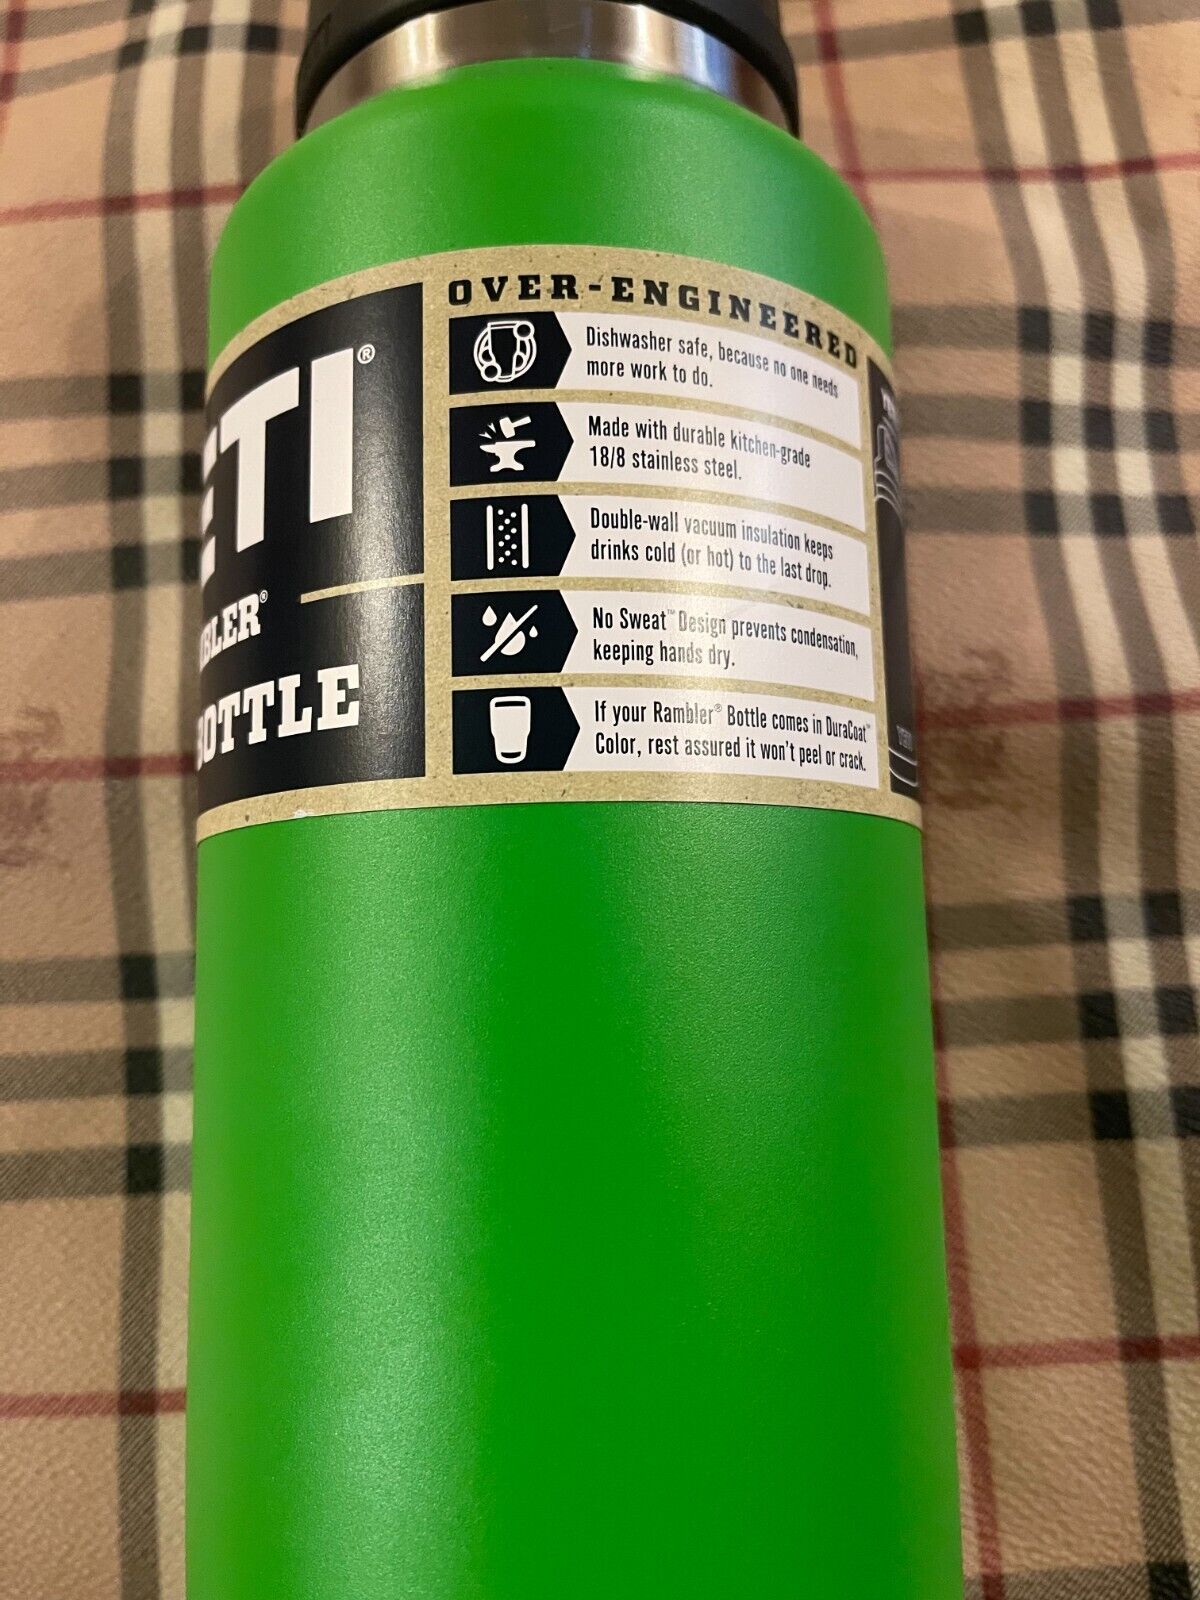 Yeti 46 oz. Rambler Bottle with Chug Cap, Canopy Green